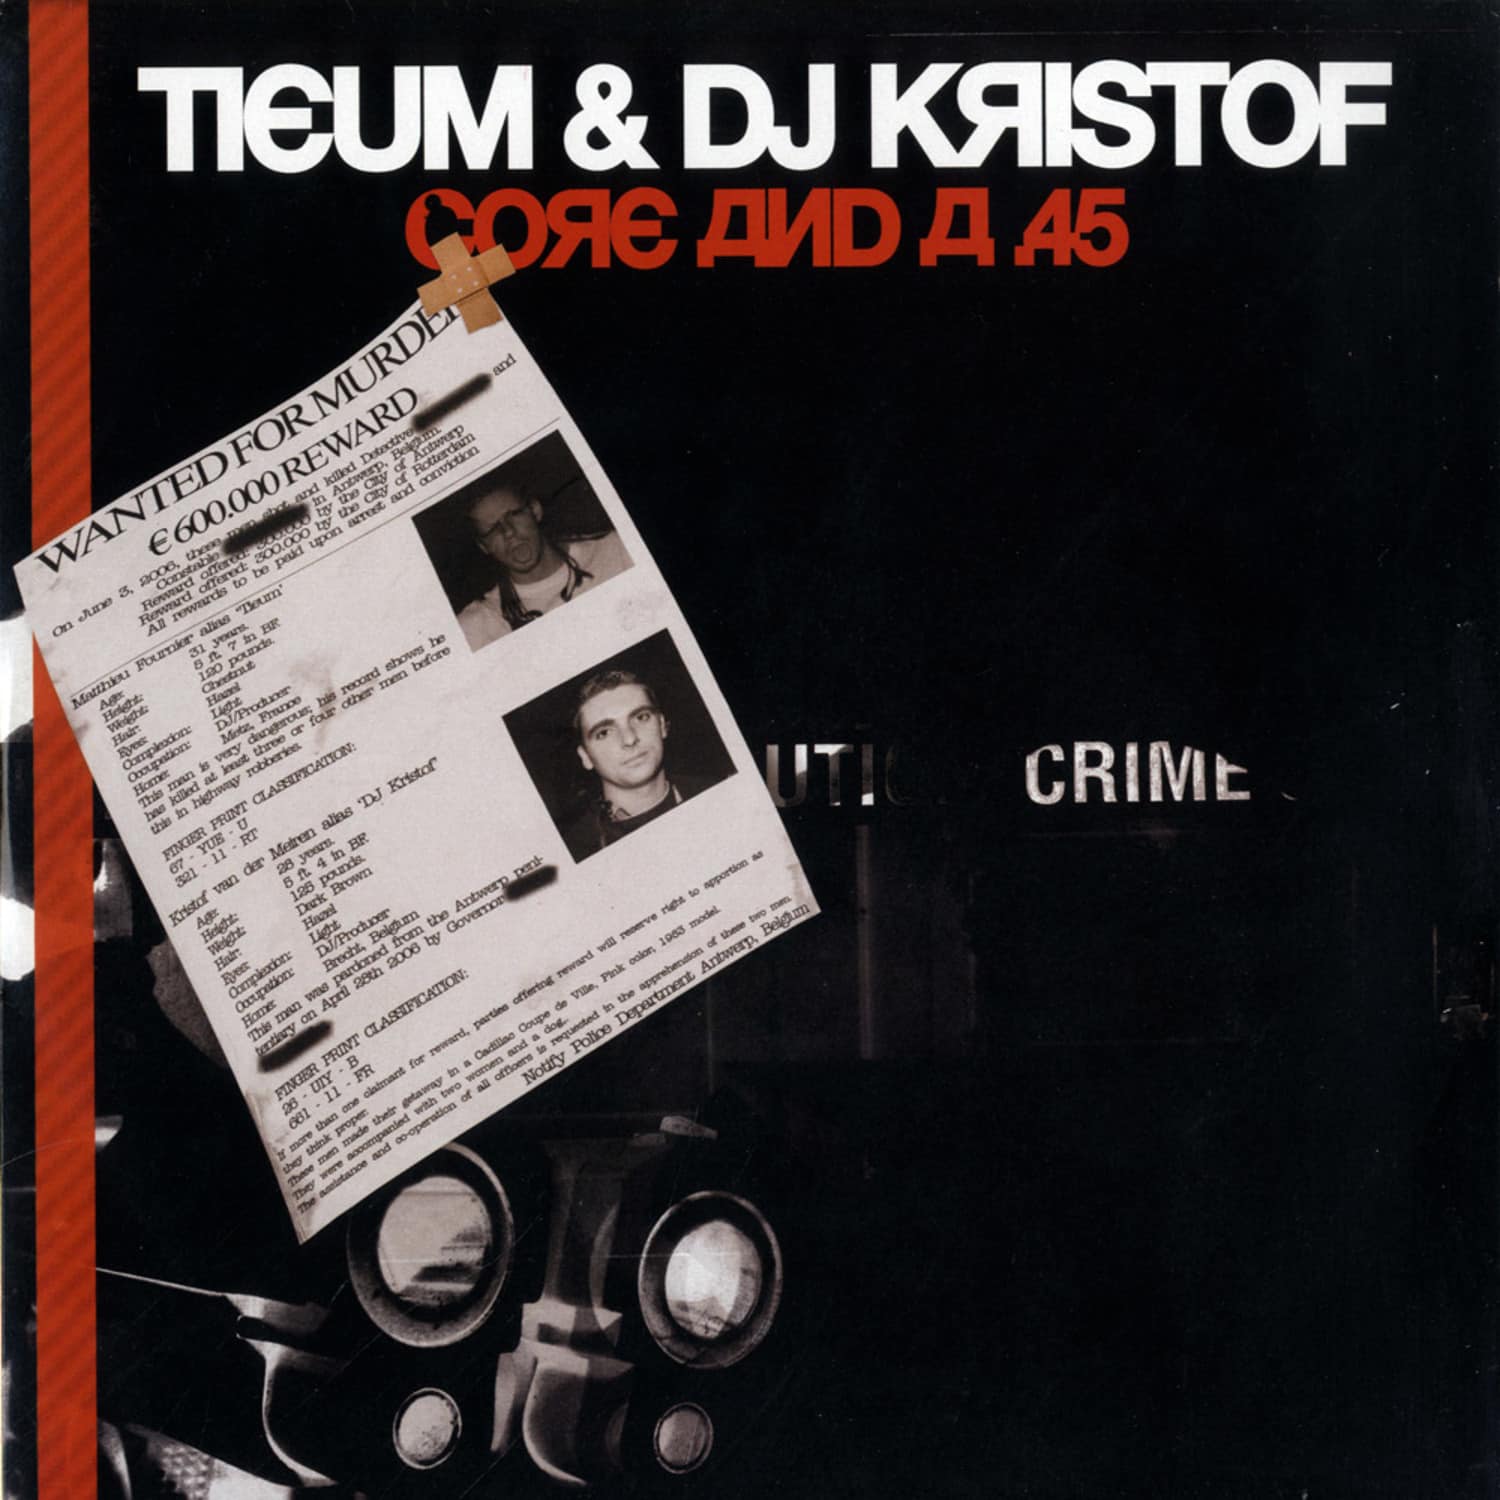 Tieum & DJ Kristof - CORE AND A.45